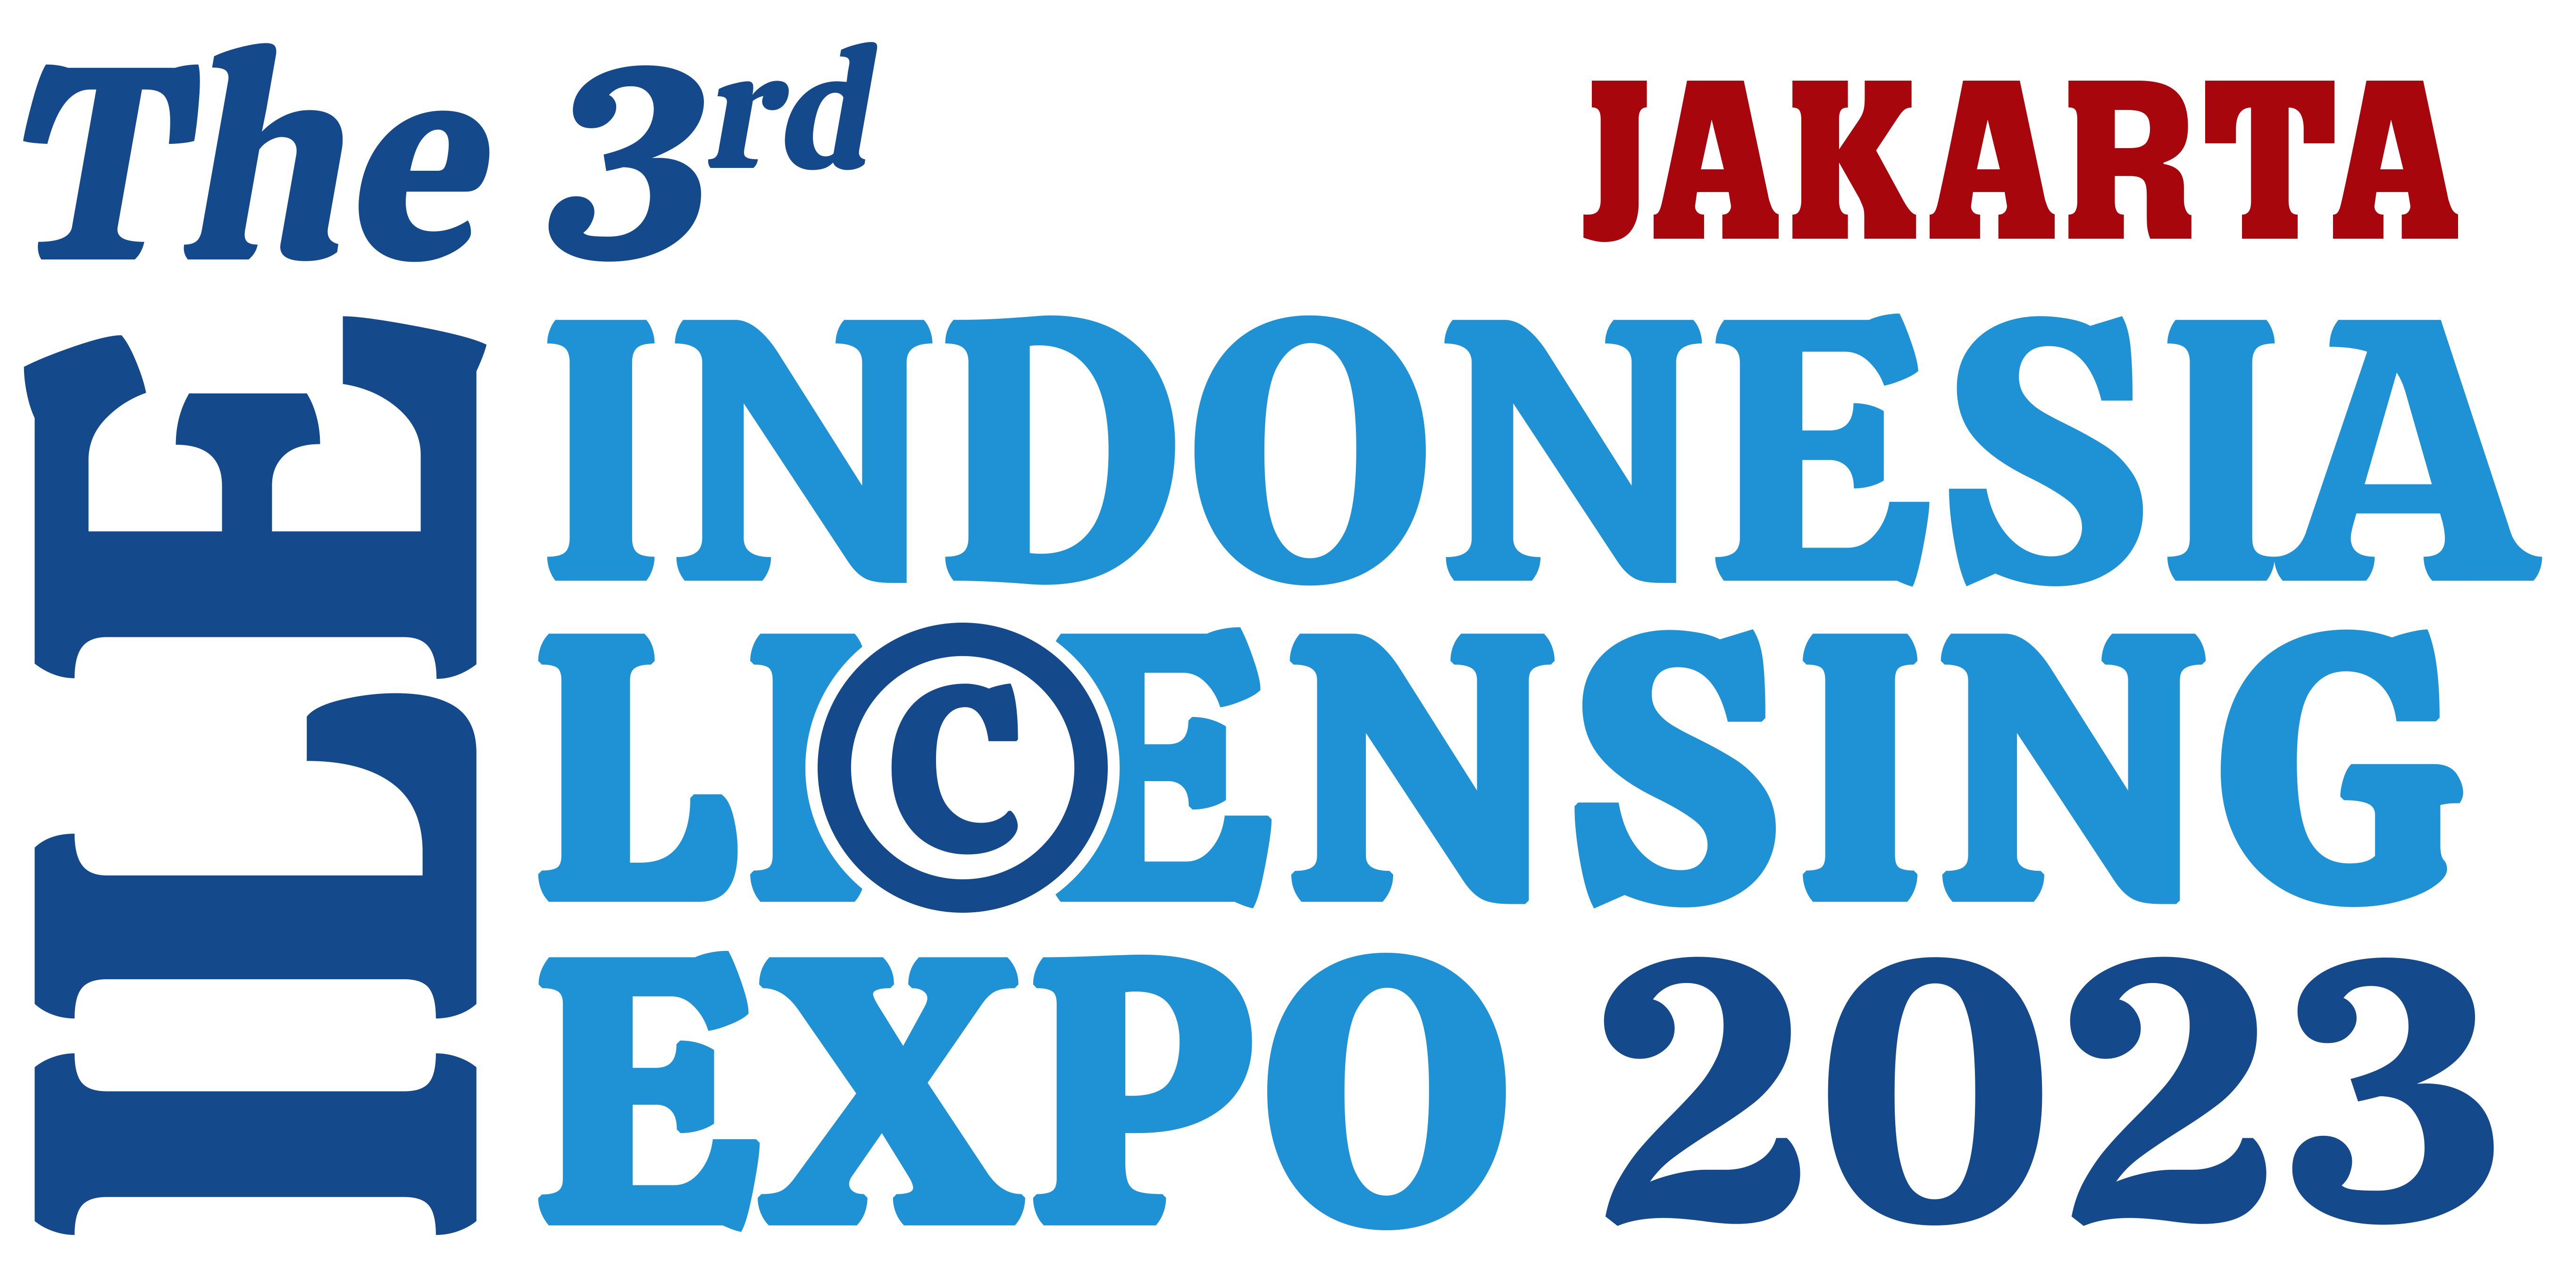 JAKARTA - INDONESIA LICENSING EXPO 2023